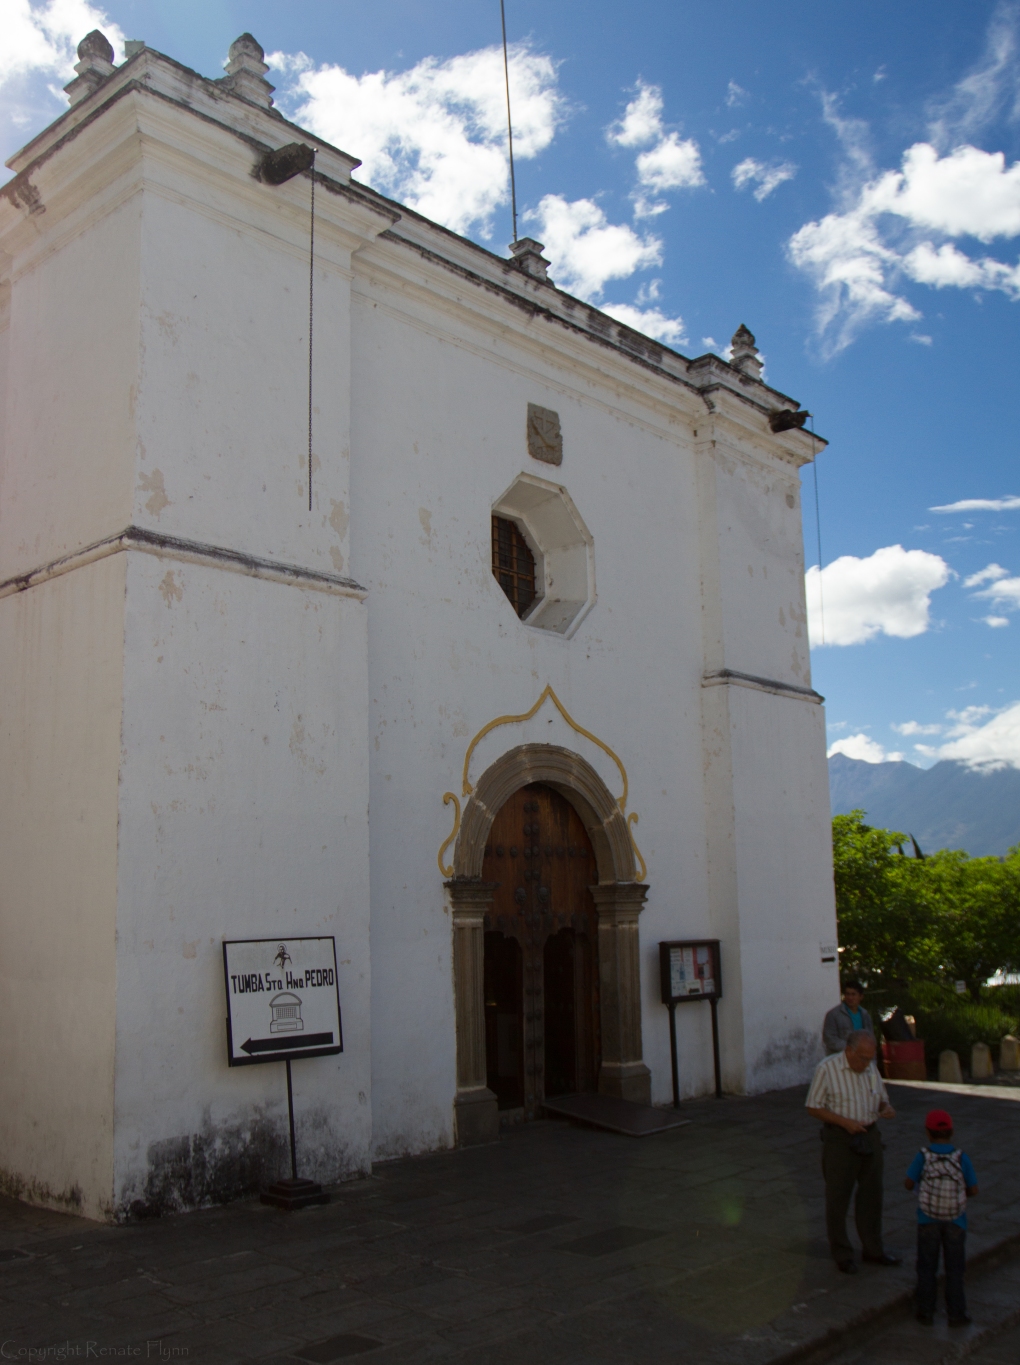 The back entrance to the San Francisco El Grande church in Antigua, Guatemala